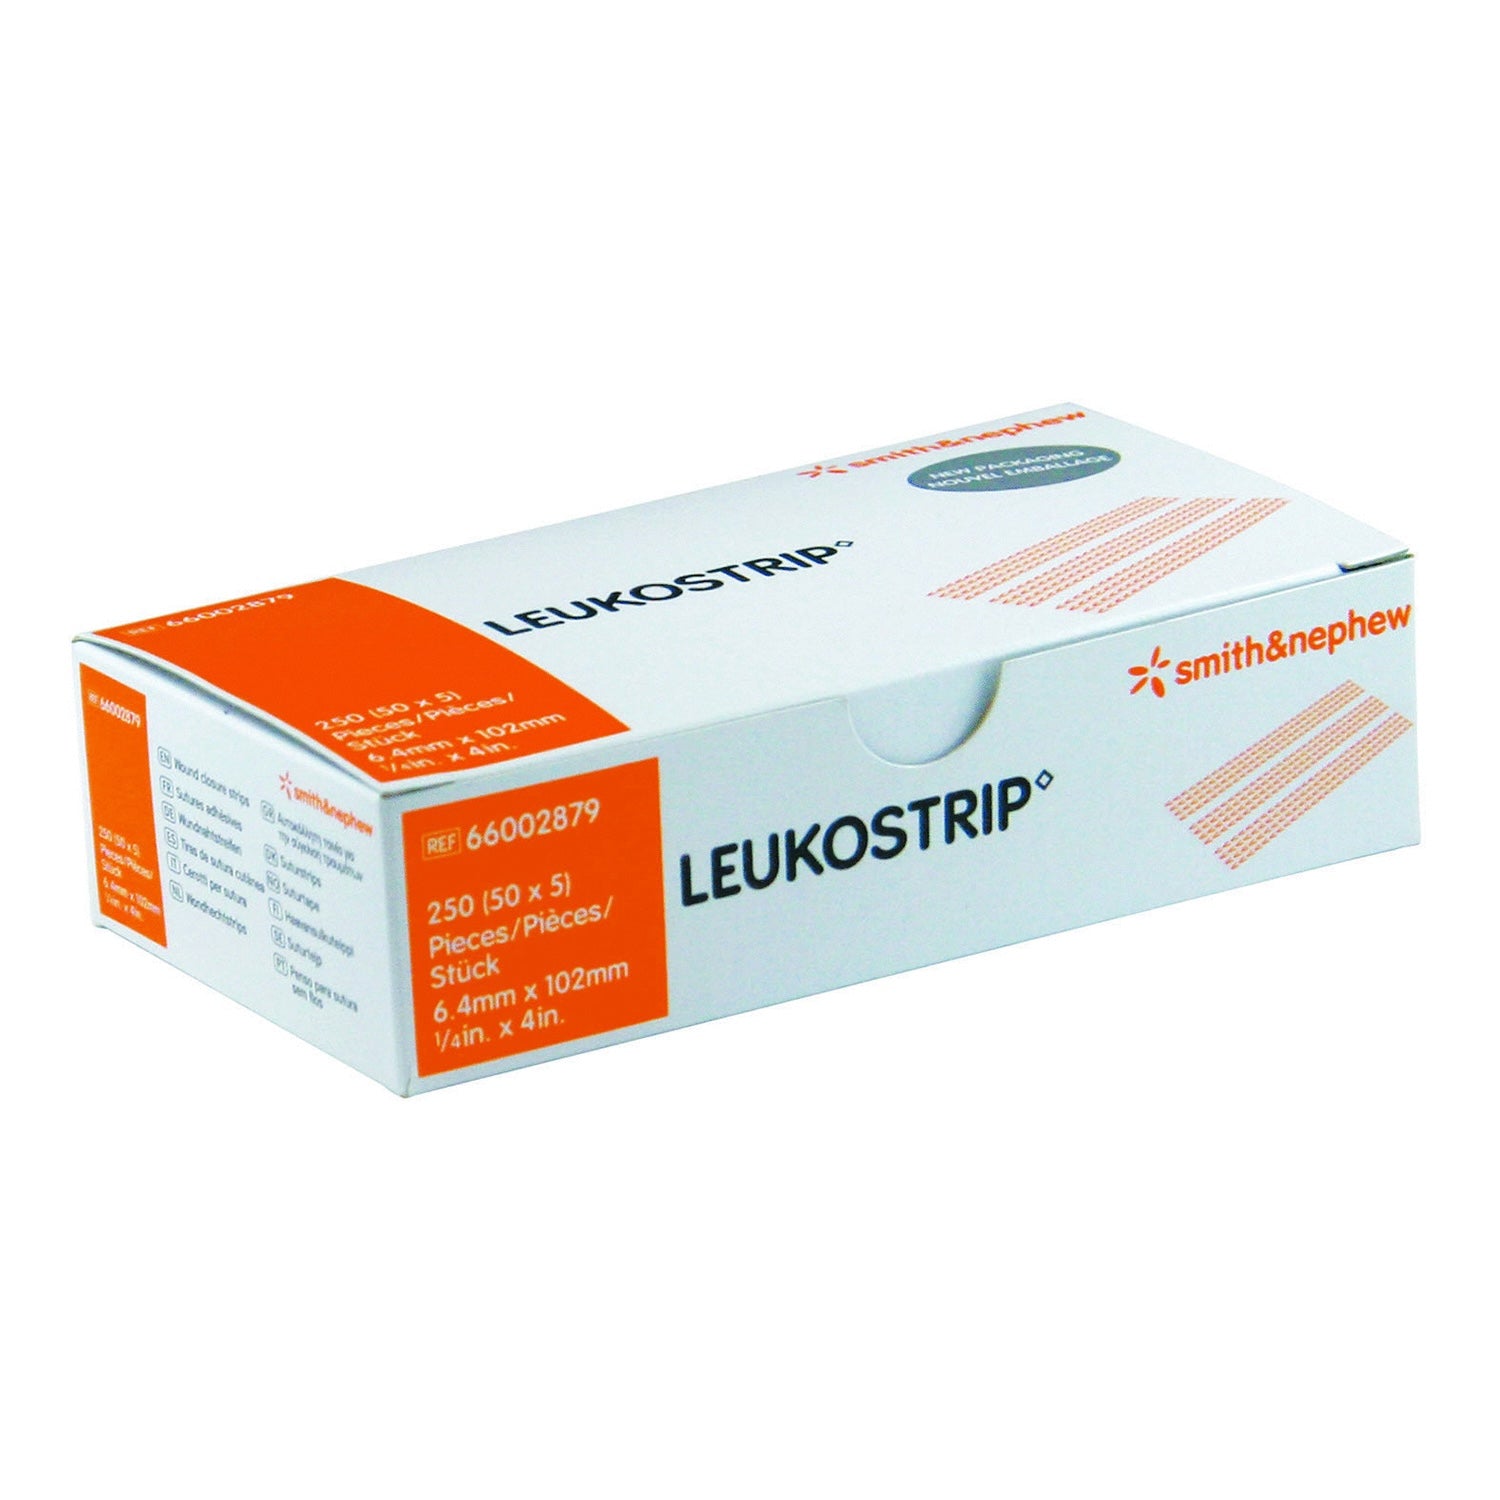 Leukostrip Skin Closure Strips | 6.4 x 102mm | 5 Strips | Pack of 50